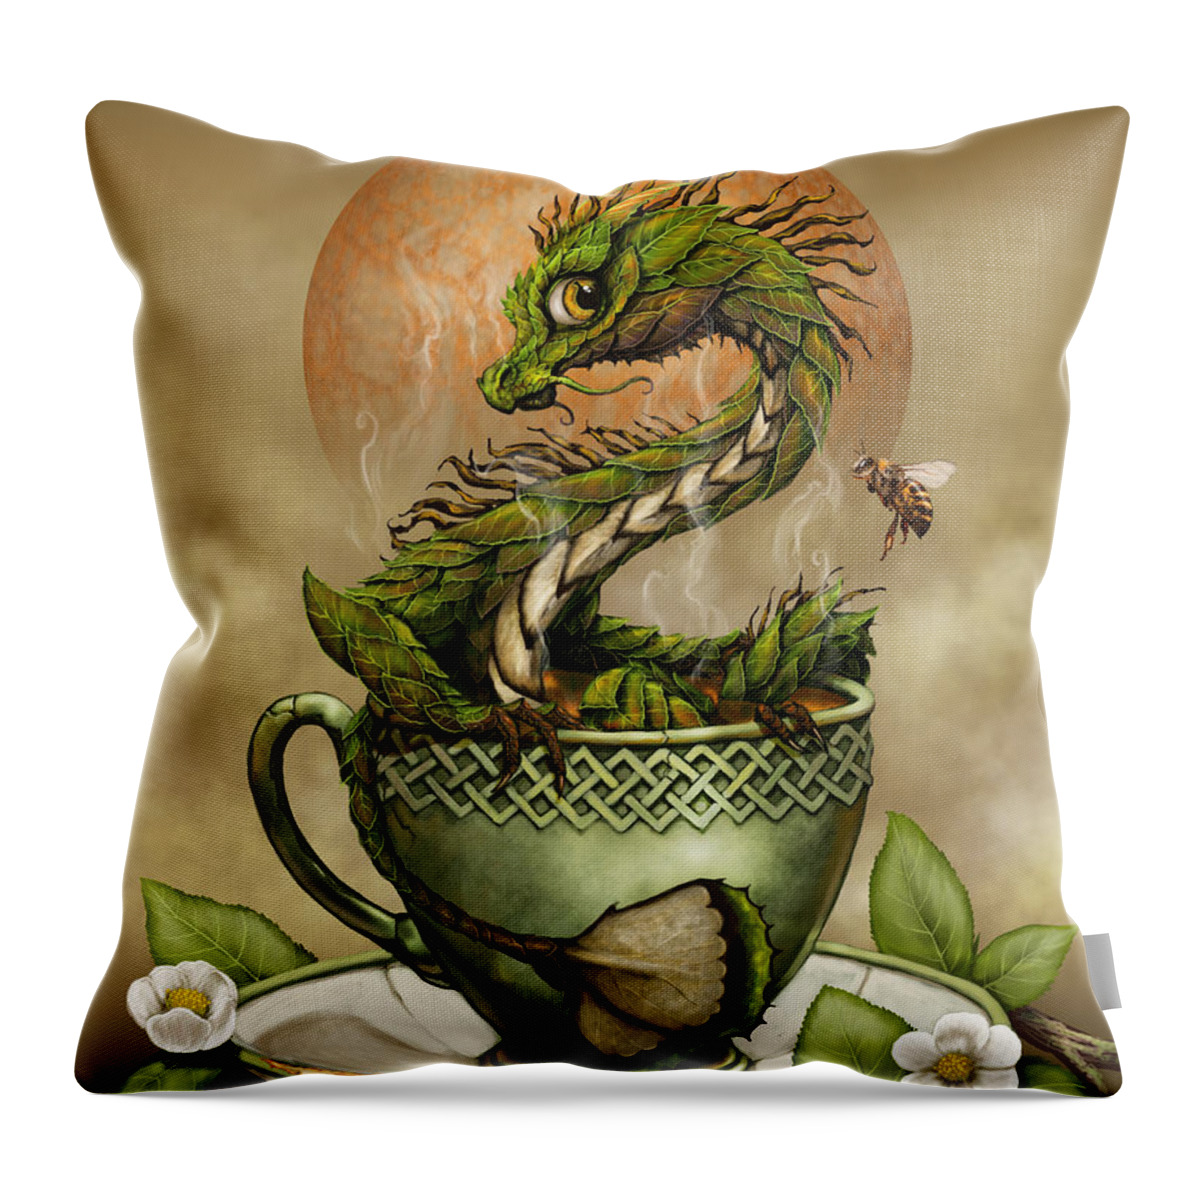 Tea Throw Pillow featuring the digital art Tea Dragon by Stanley Morrison